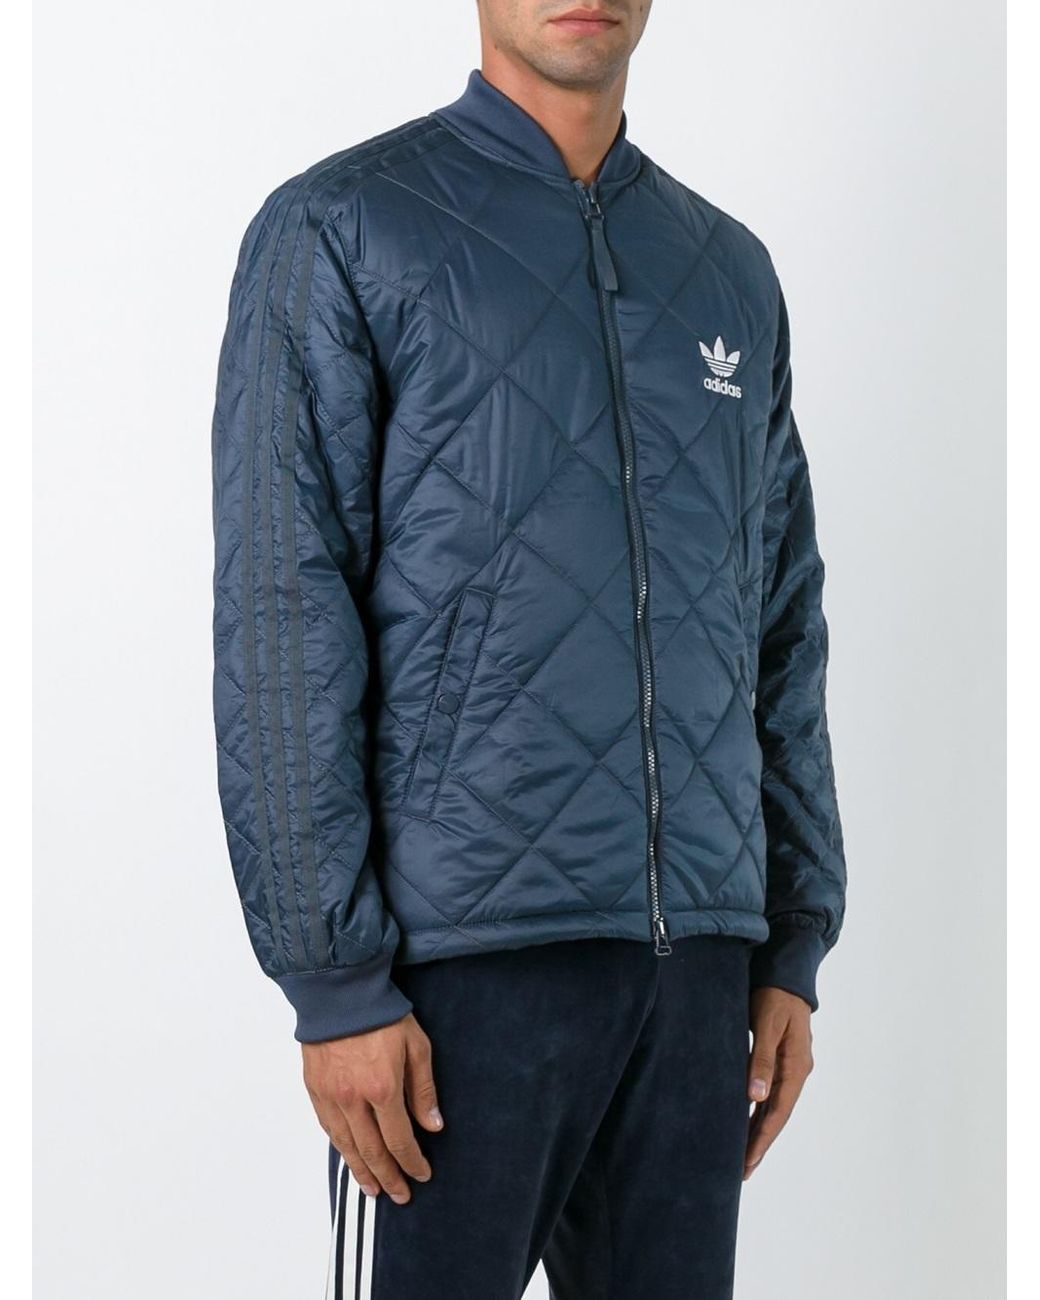 adidas Originals 'quilted Superstar' Bomber Jacket in Blue for Men | Lyst